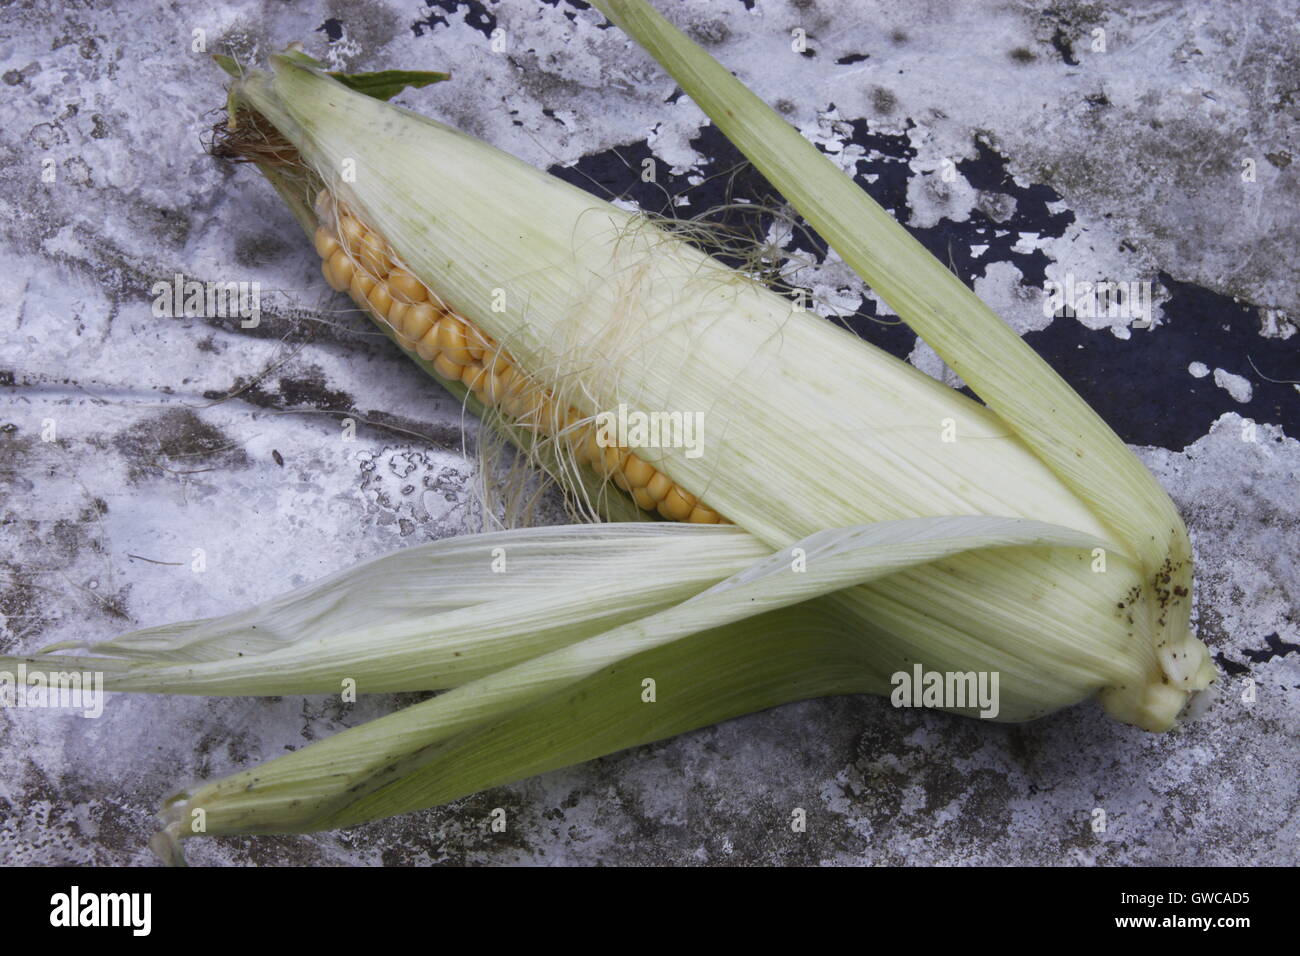 Sweetcorn maize corn on the cob fresh yellow kernel home grown in husk on metal aluminium garden table in daylight Stock Photo